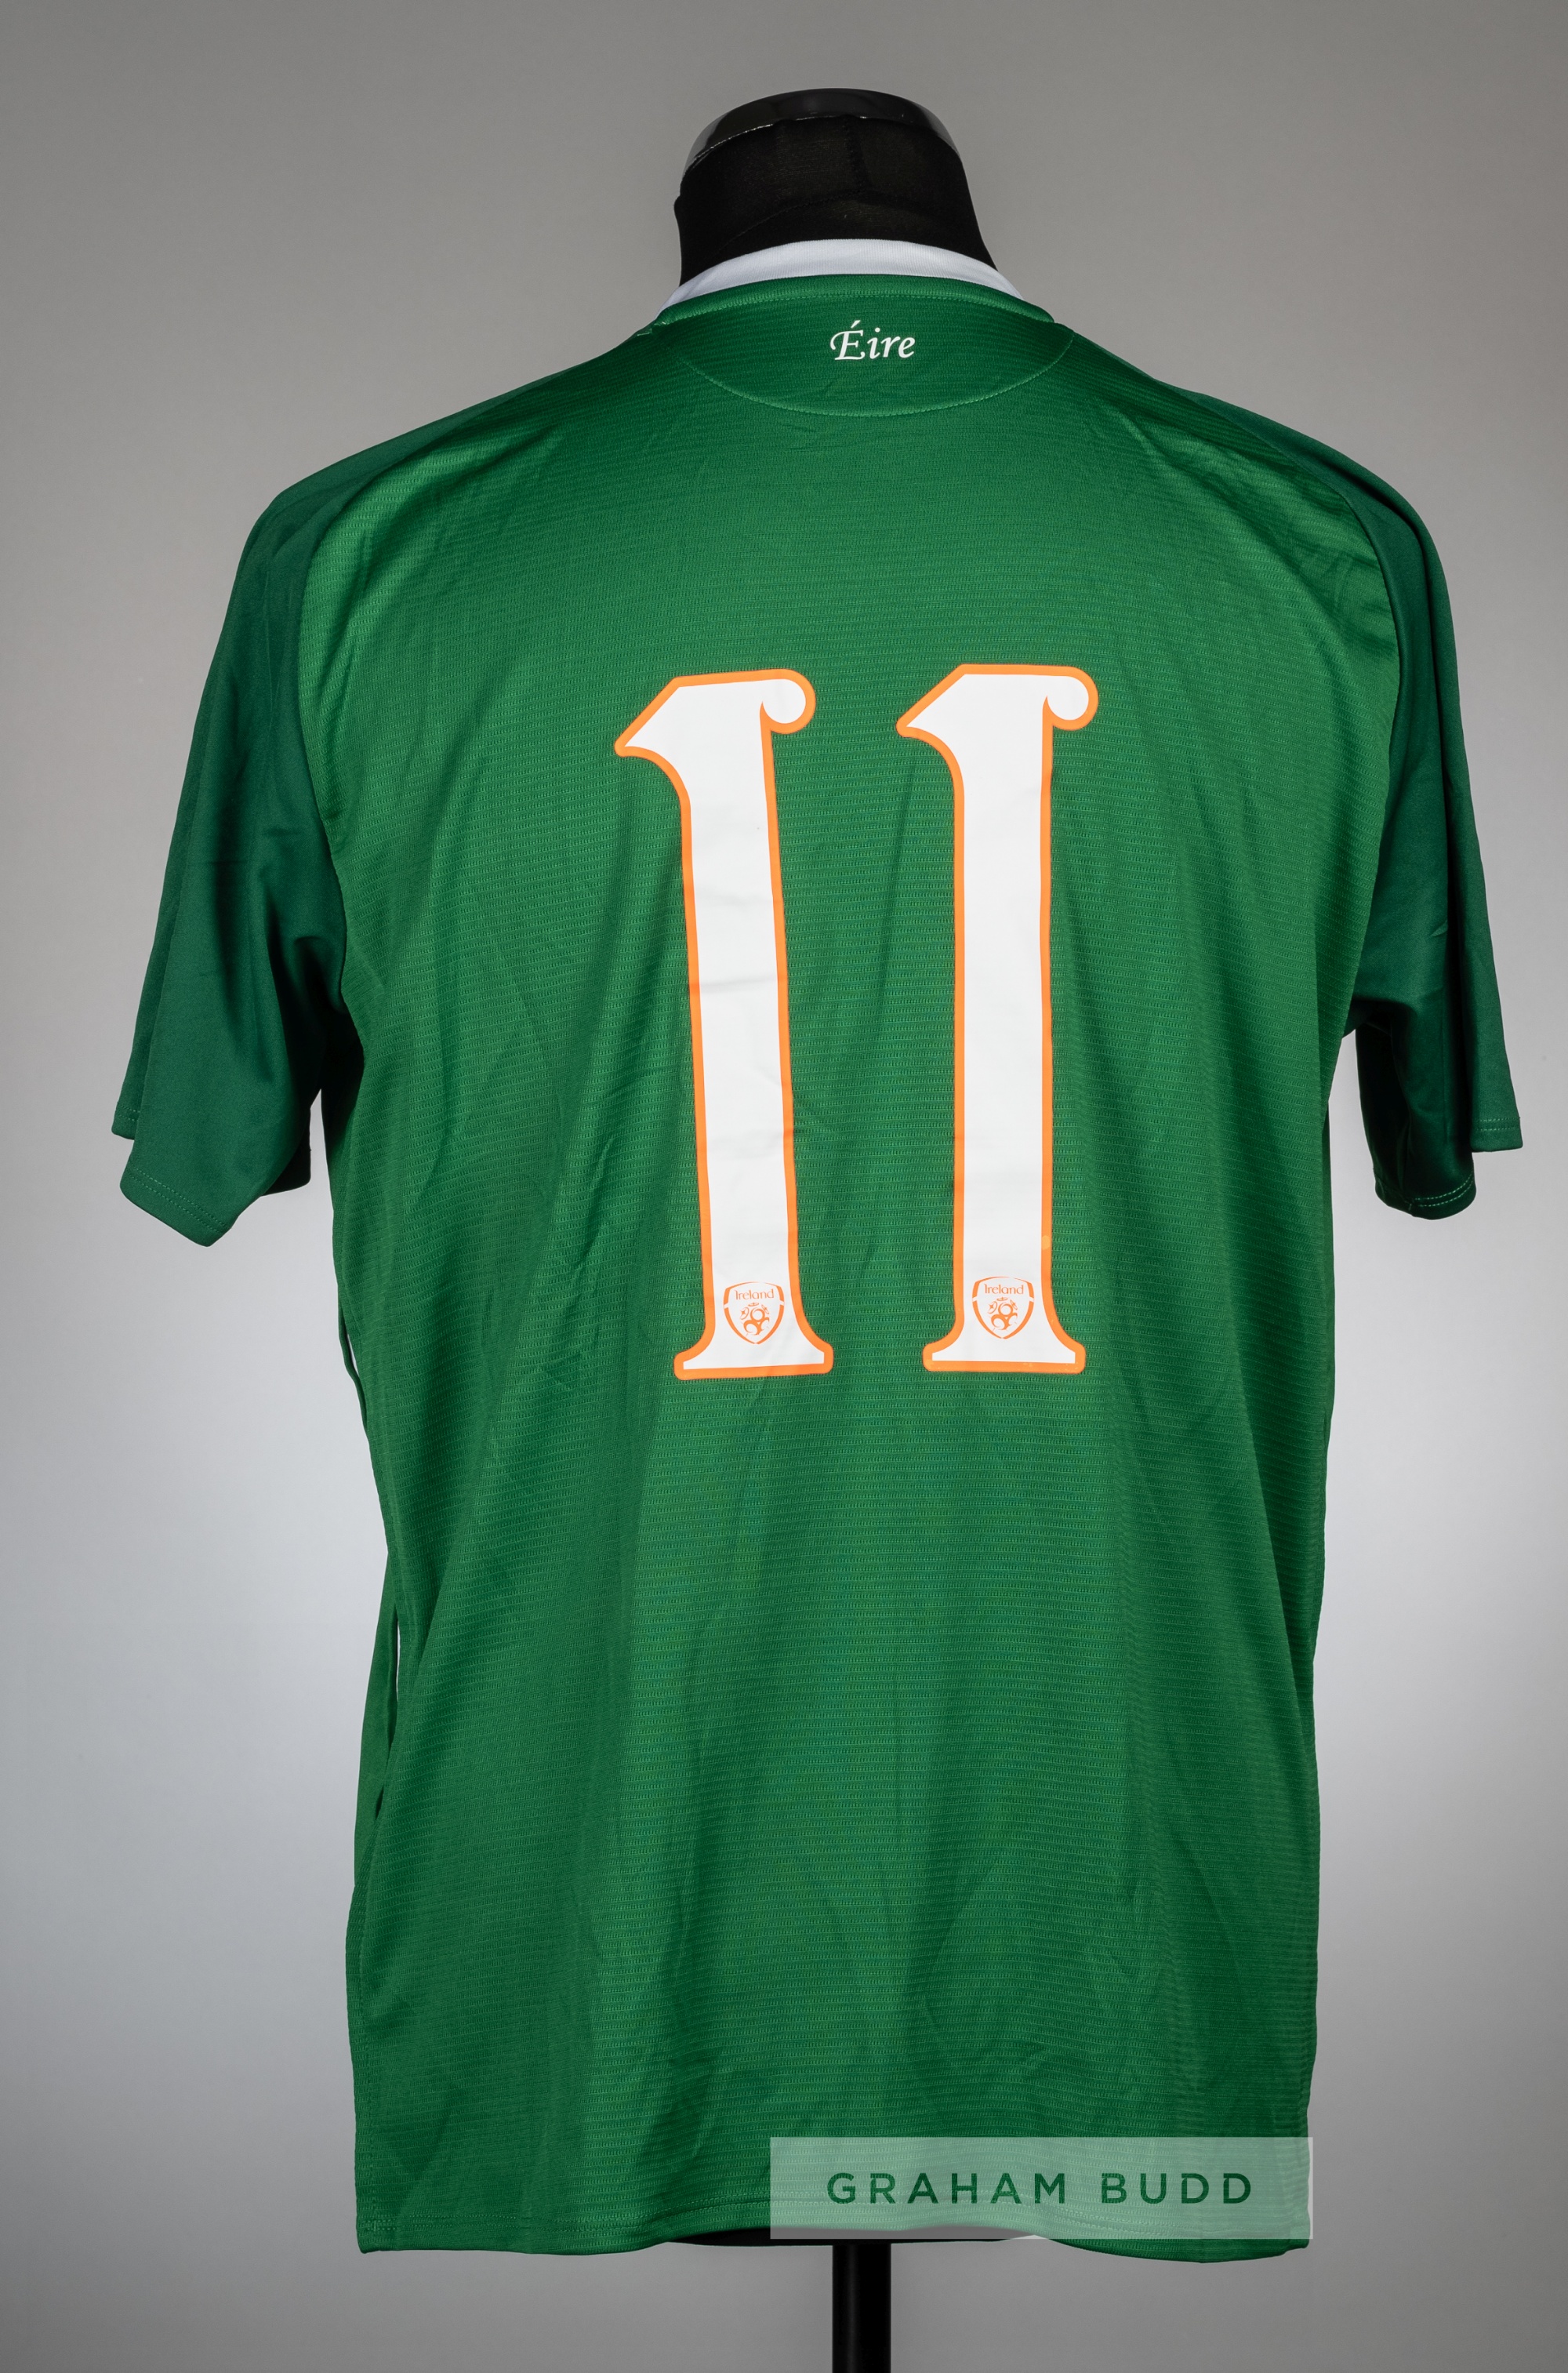 Ronan Curtis signed green Republic of Ireland no.11 home jersey, circa 2018, New Balance, short- - Image 2 of 2